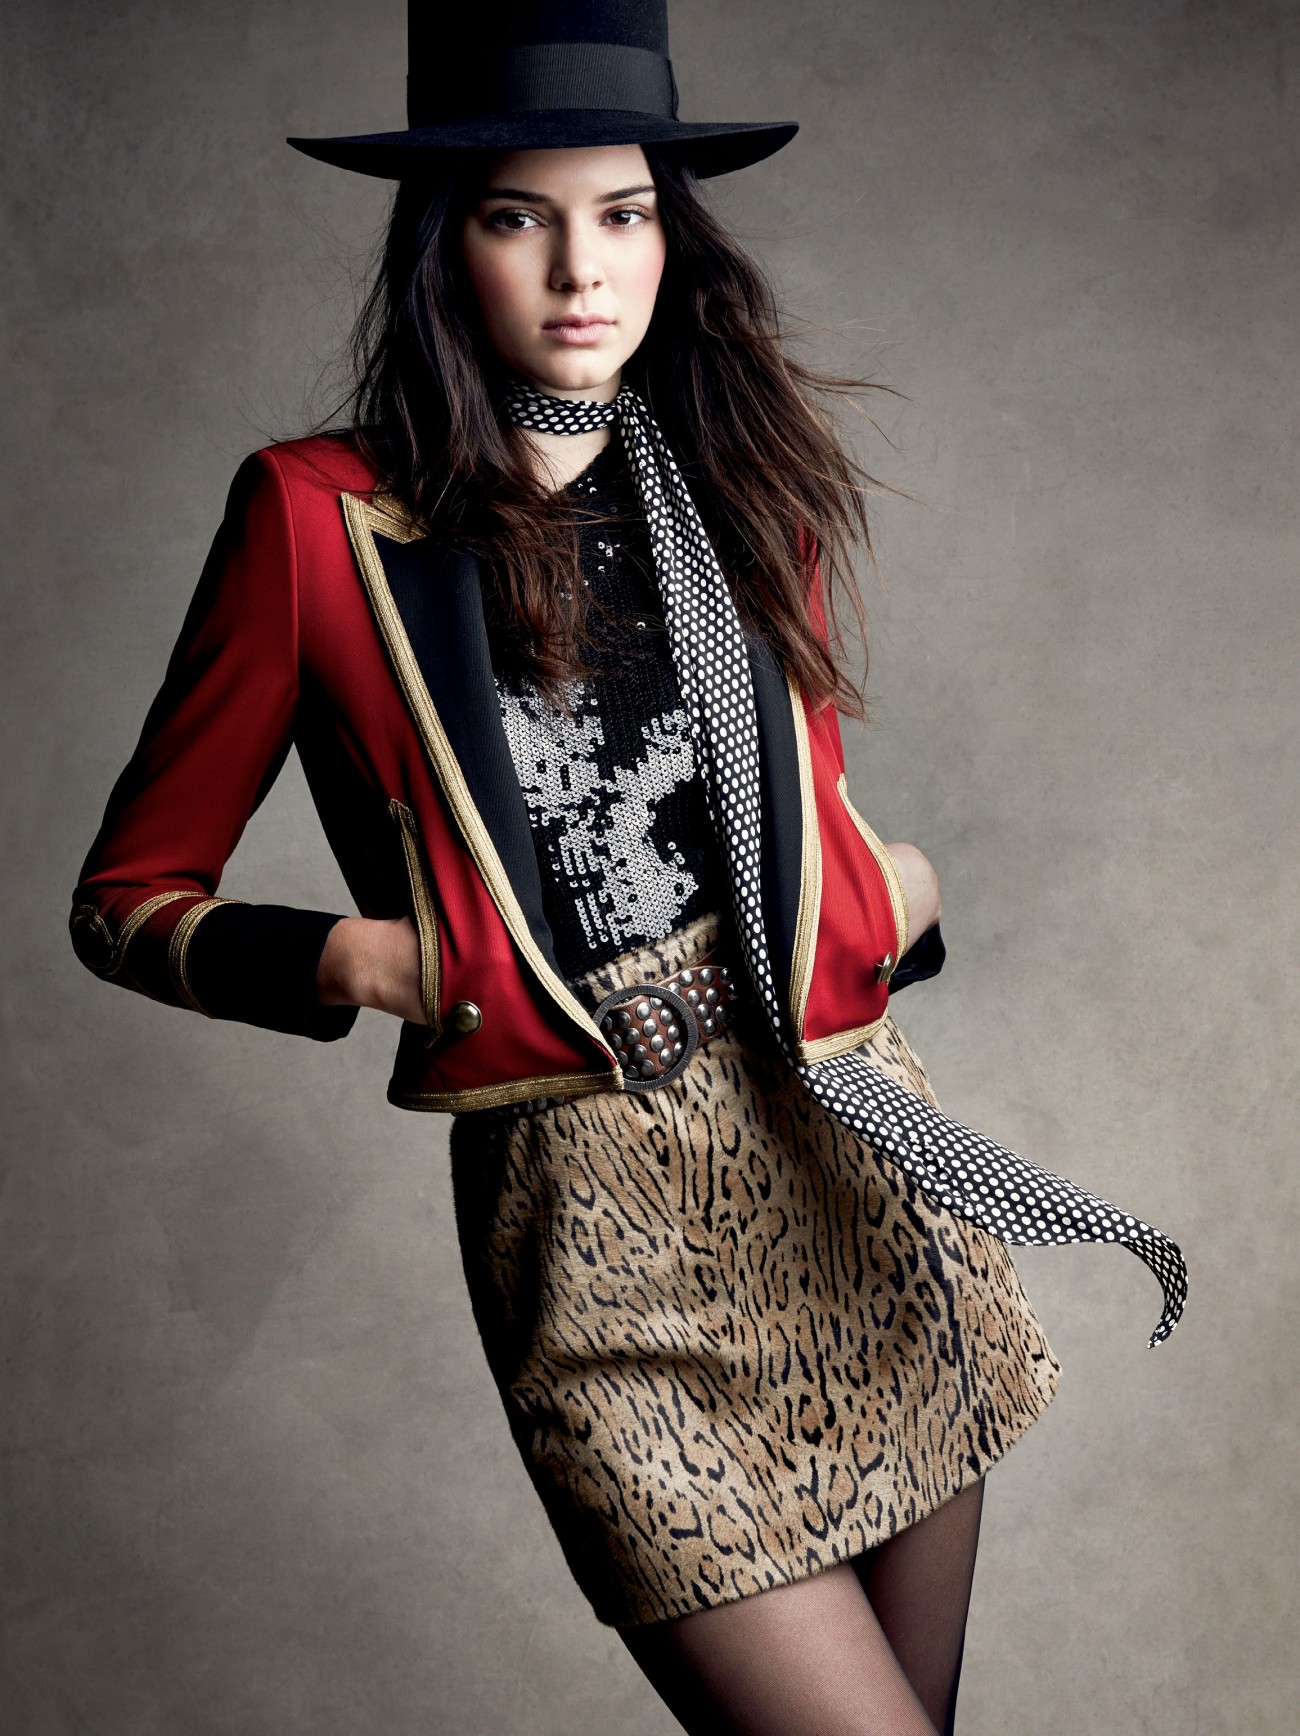 Kendall Jenner by Patrick Demarchelier for Vogue US December 2014_09.jpg